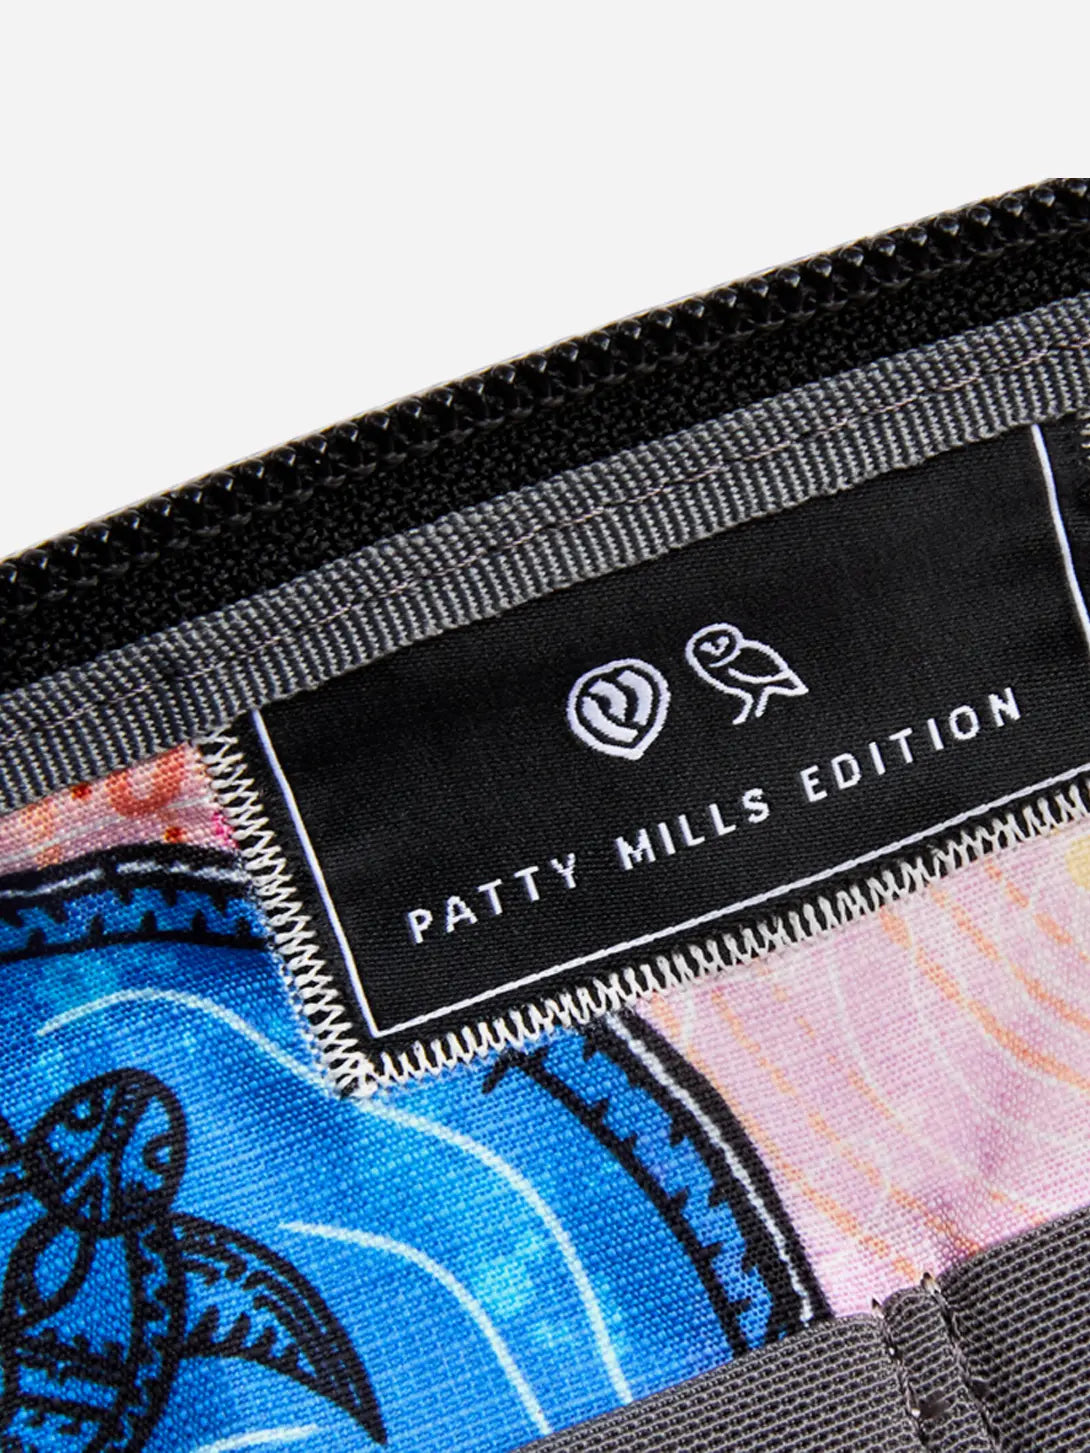 White Ochre Bellroy Patty Mills Limited Edition Tech Kit